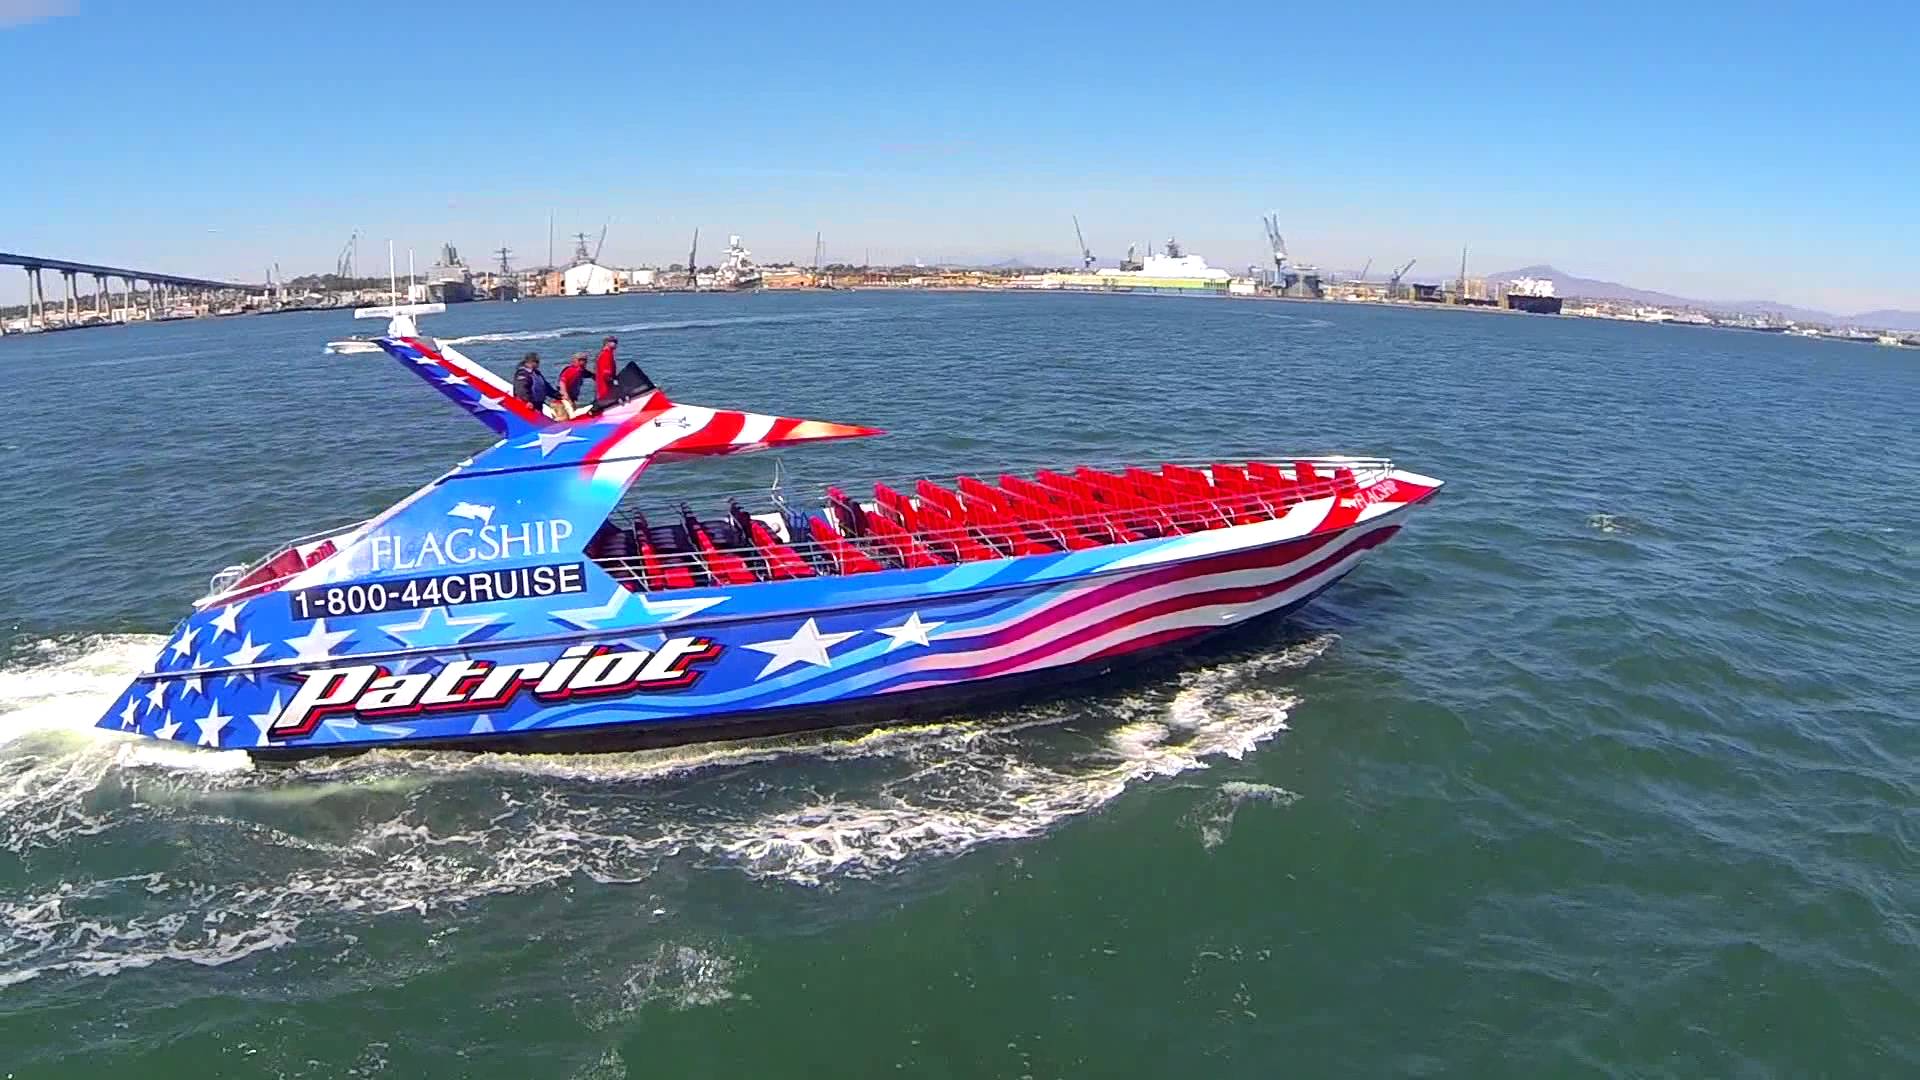 Ride the Patriot Jet Boat - YouTube